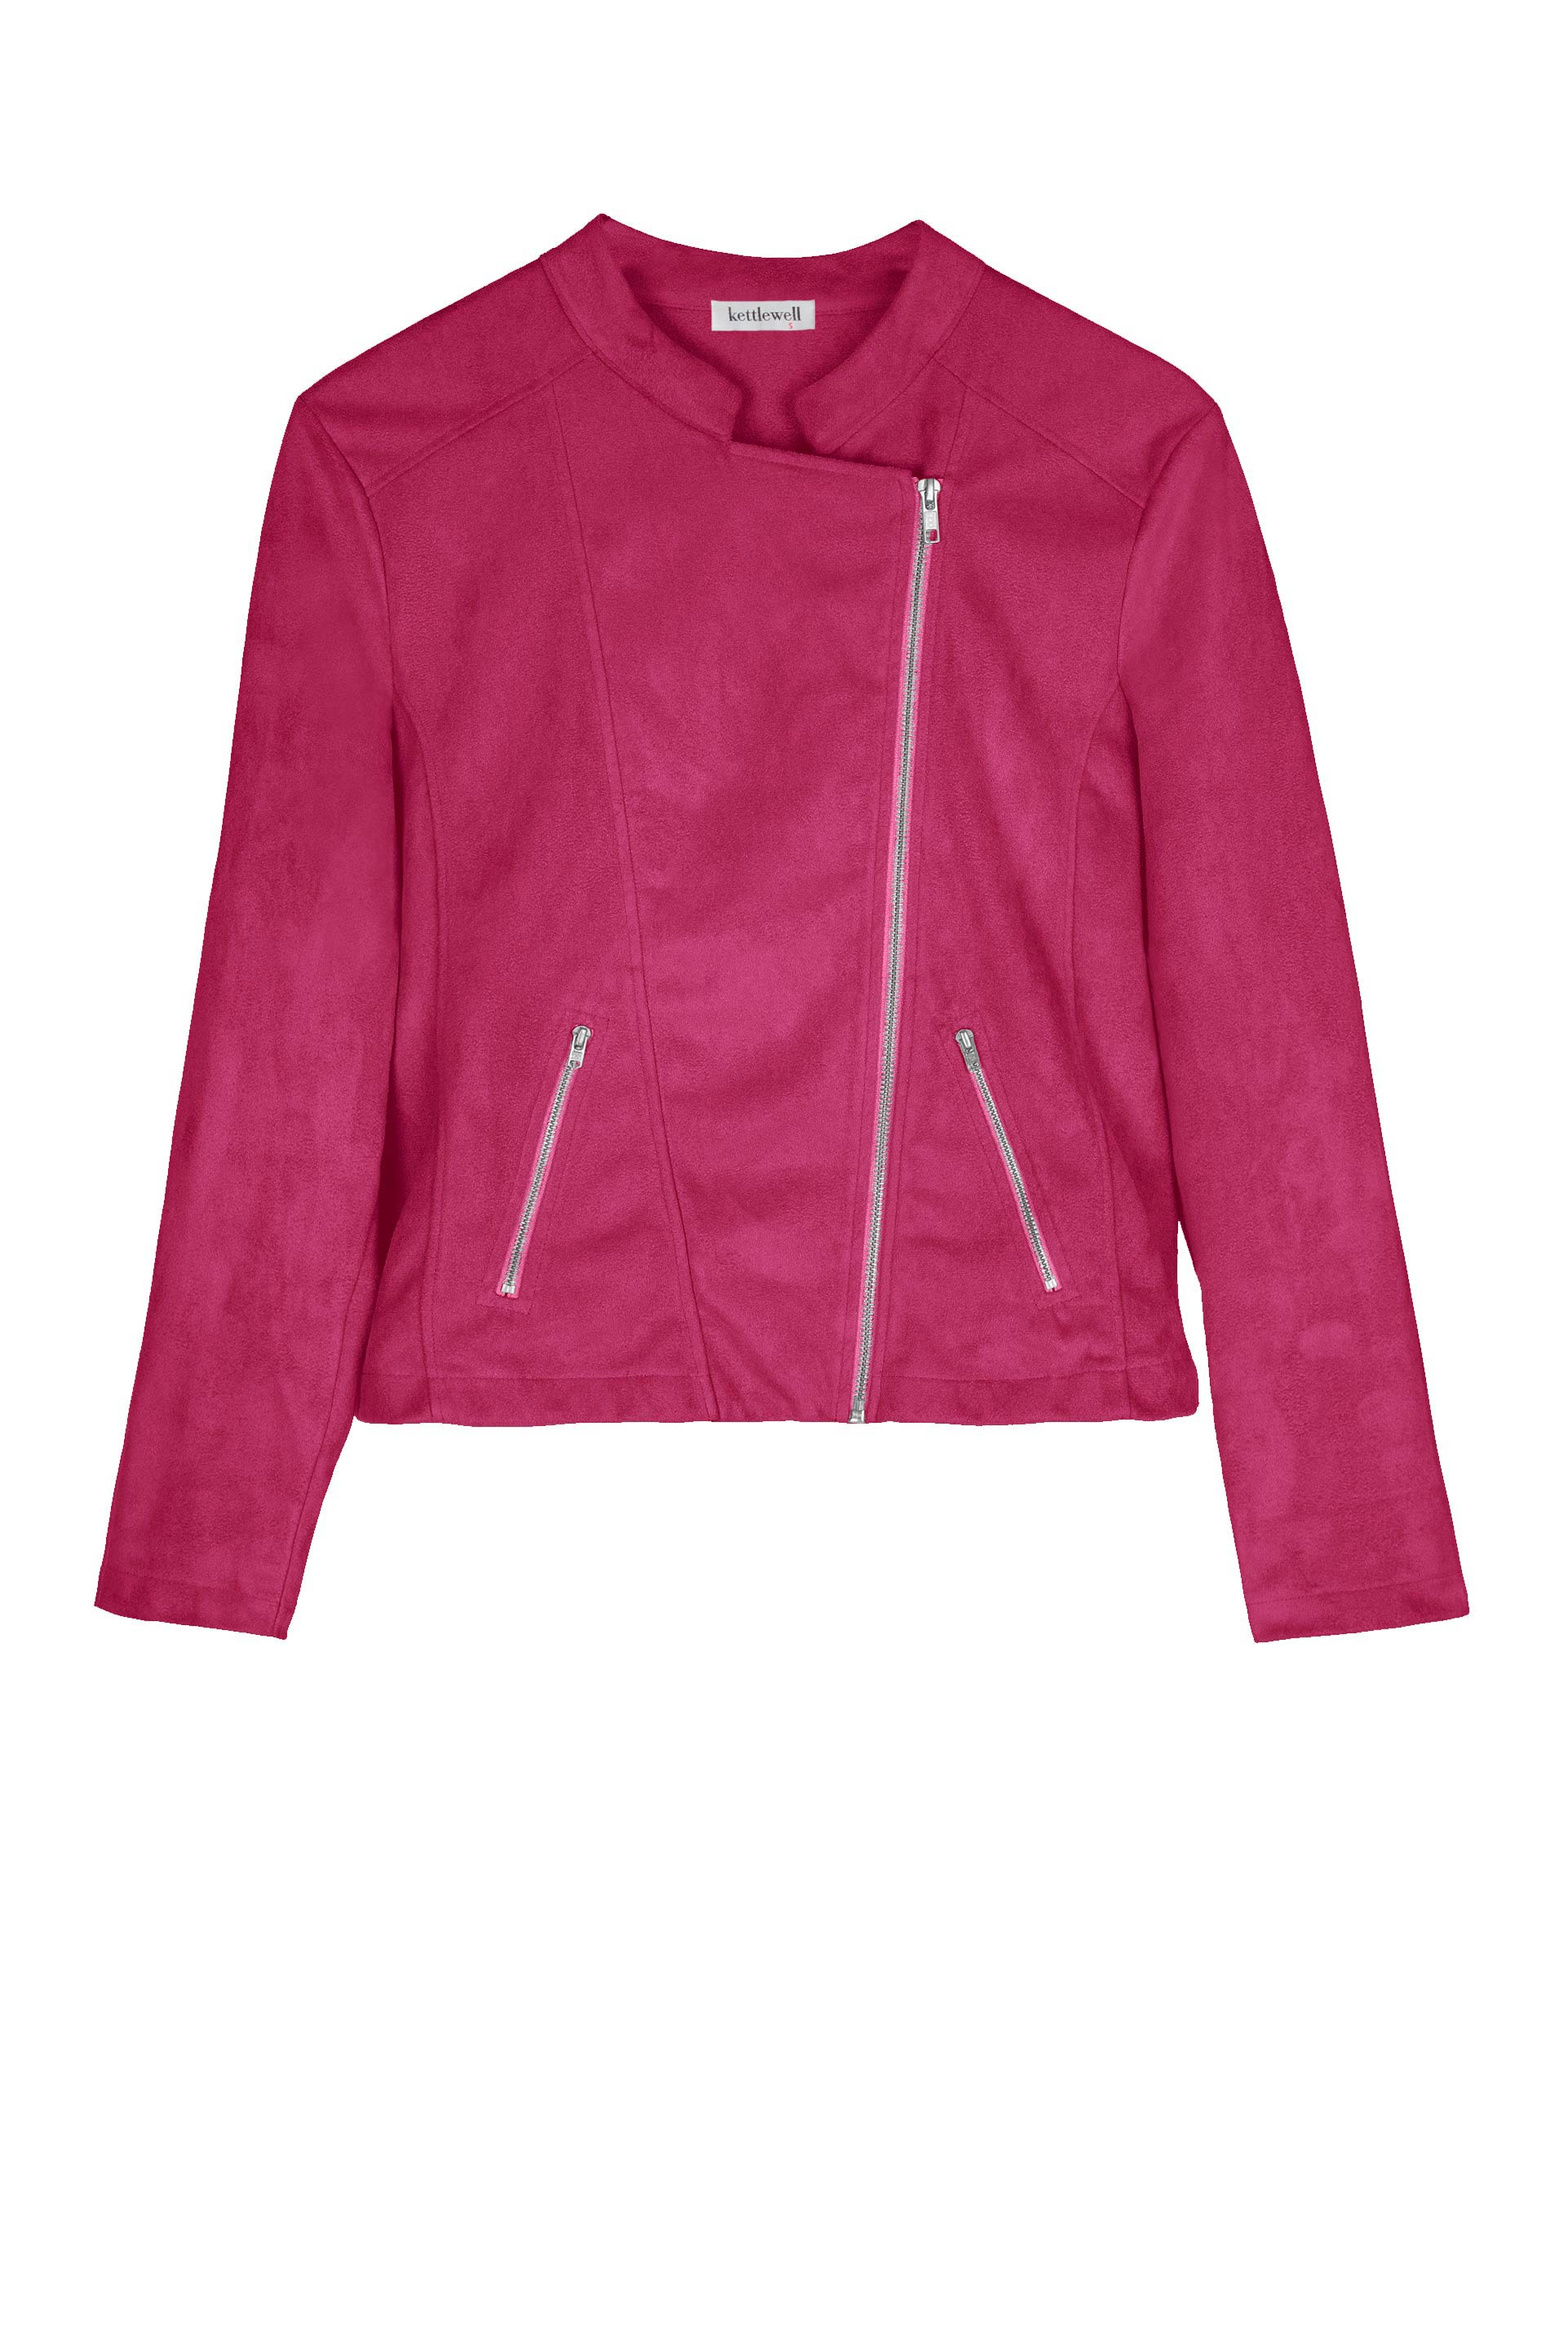 74233_rachel_jacket_pink_raspberry.jpg